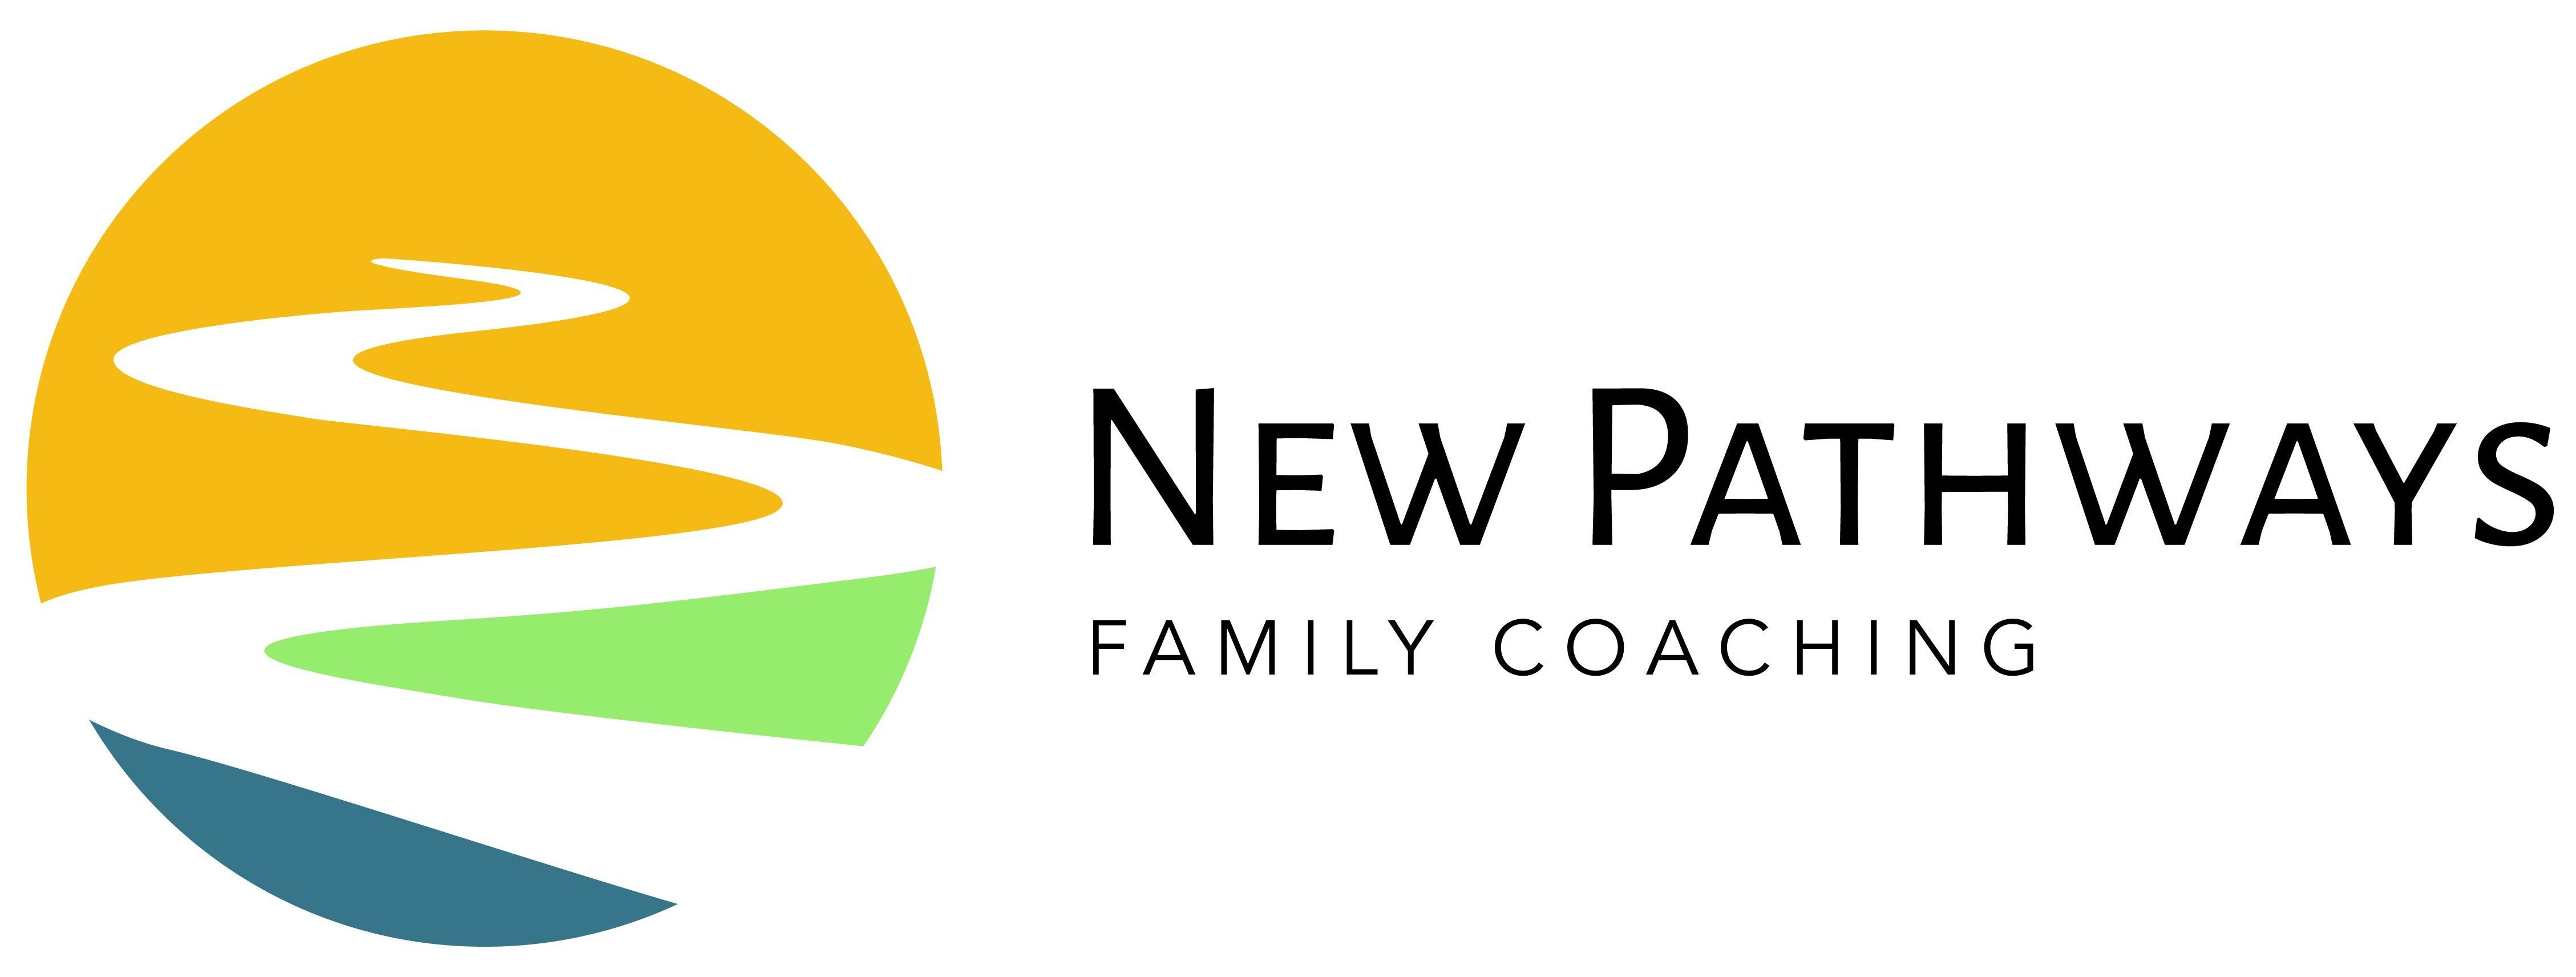 New Pathways Family Coaching